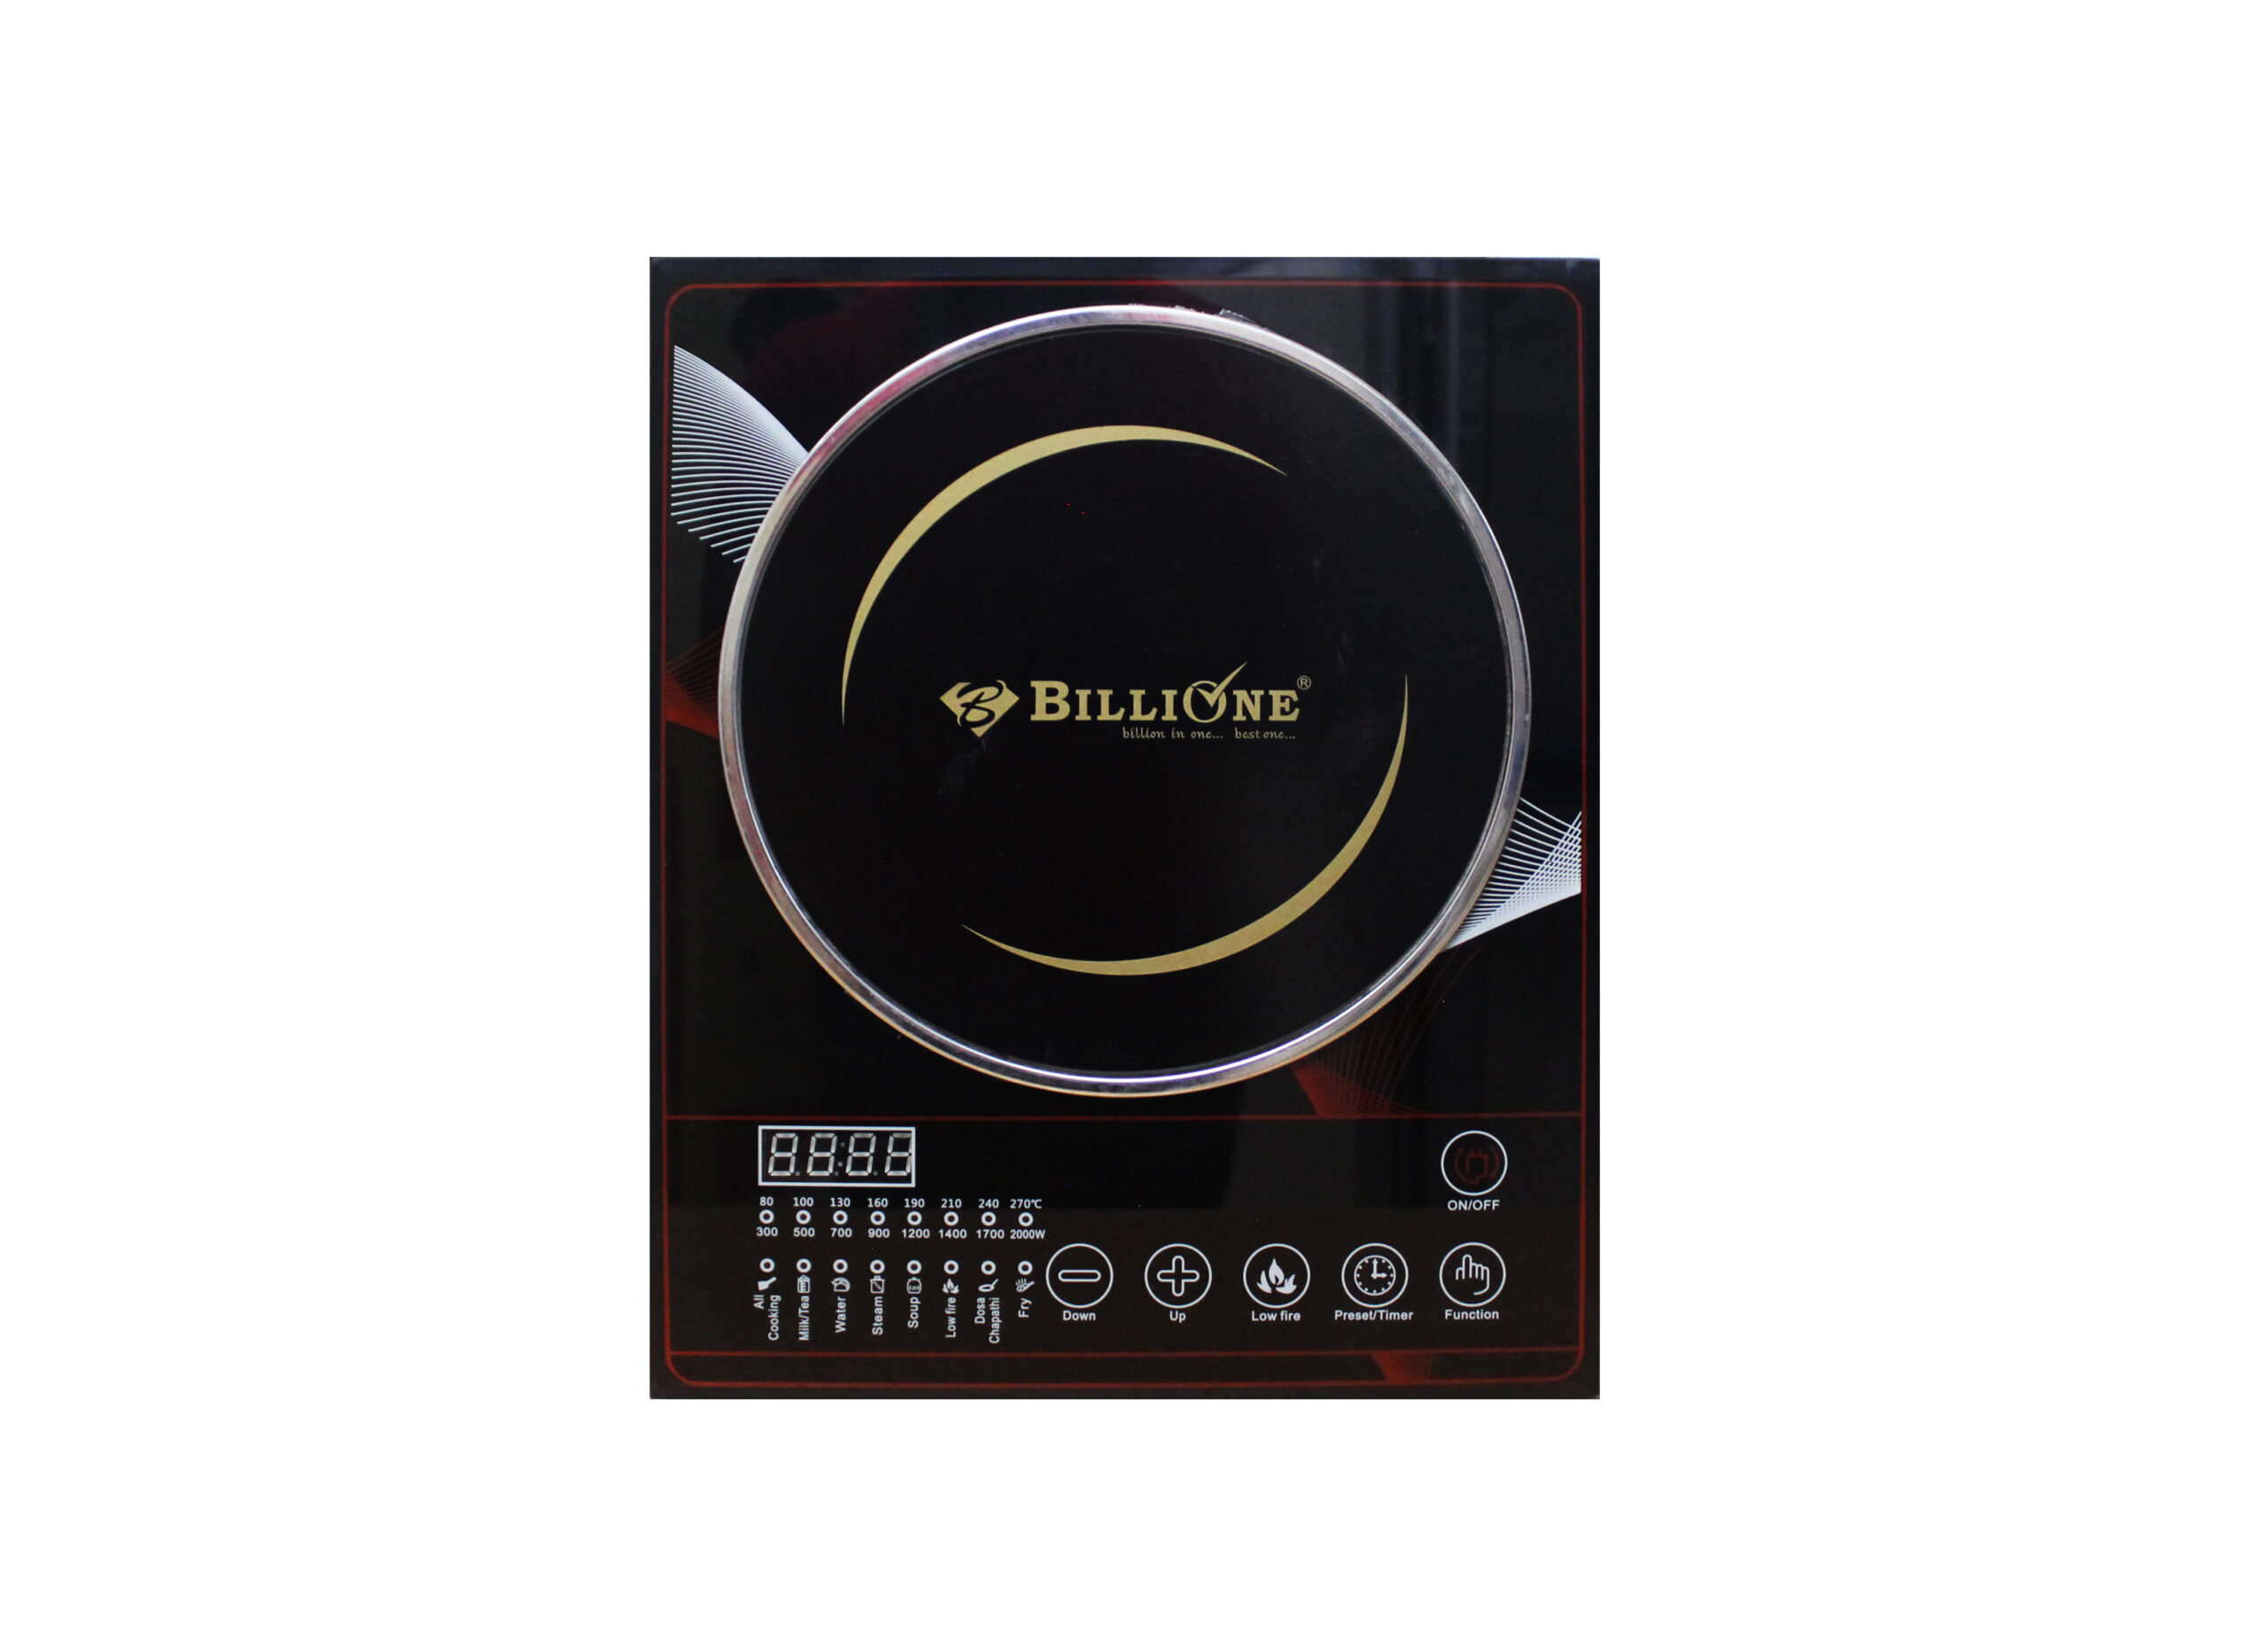 Billione Classic Golden Ring Induction